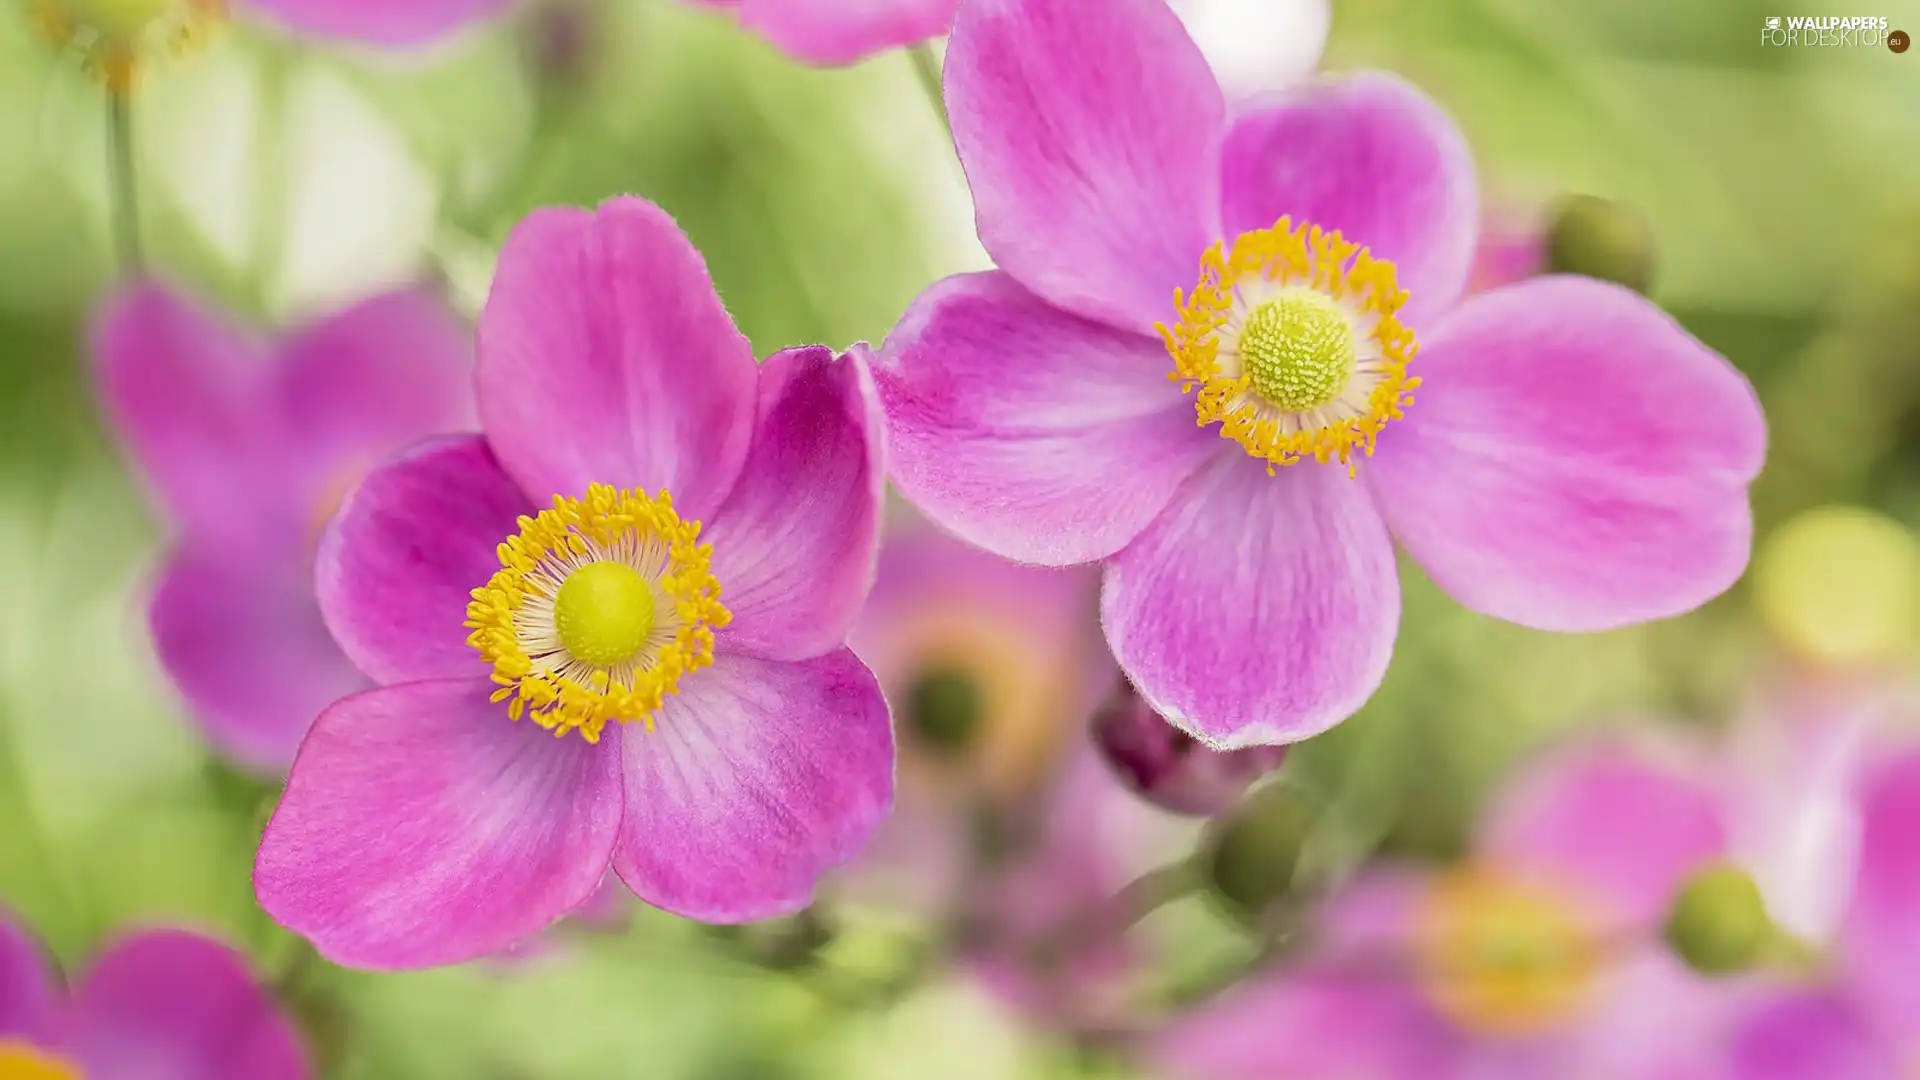 Flowers, Japanese anemone